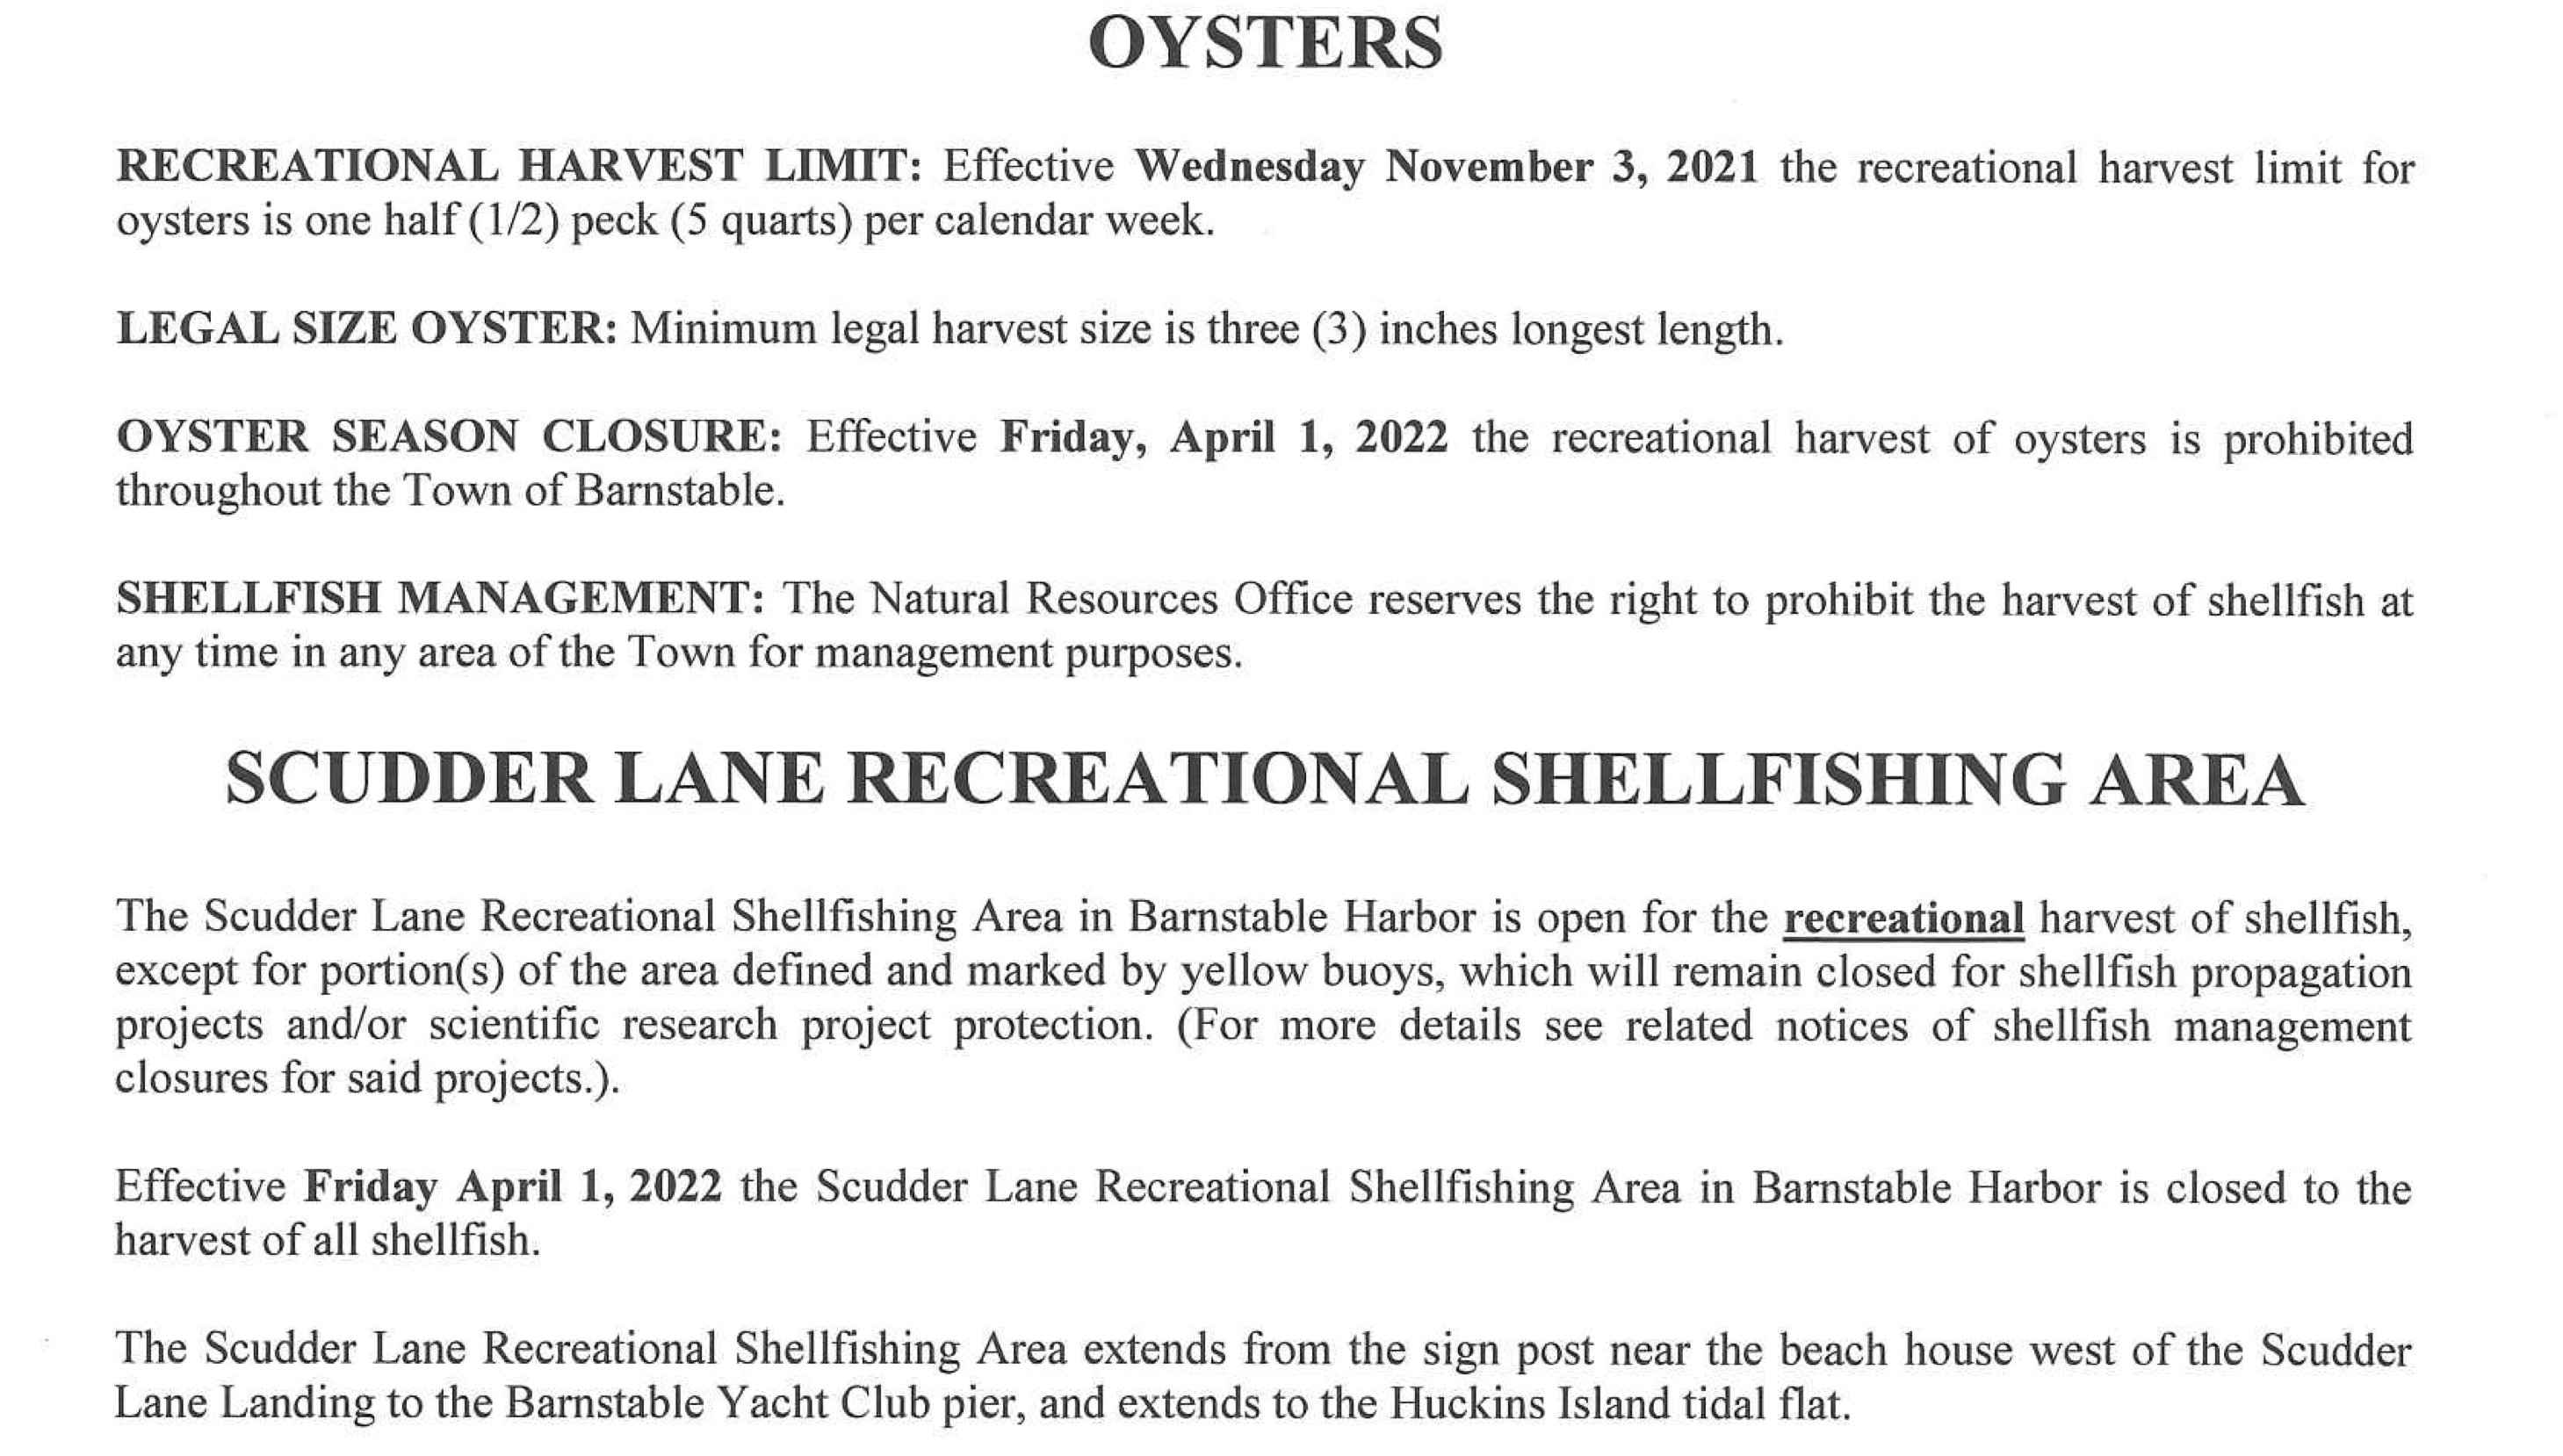 Oyster Regulations for 21-22 season